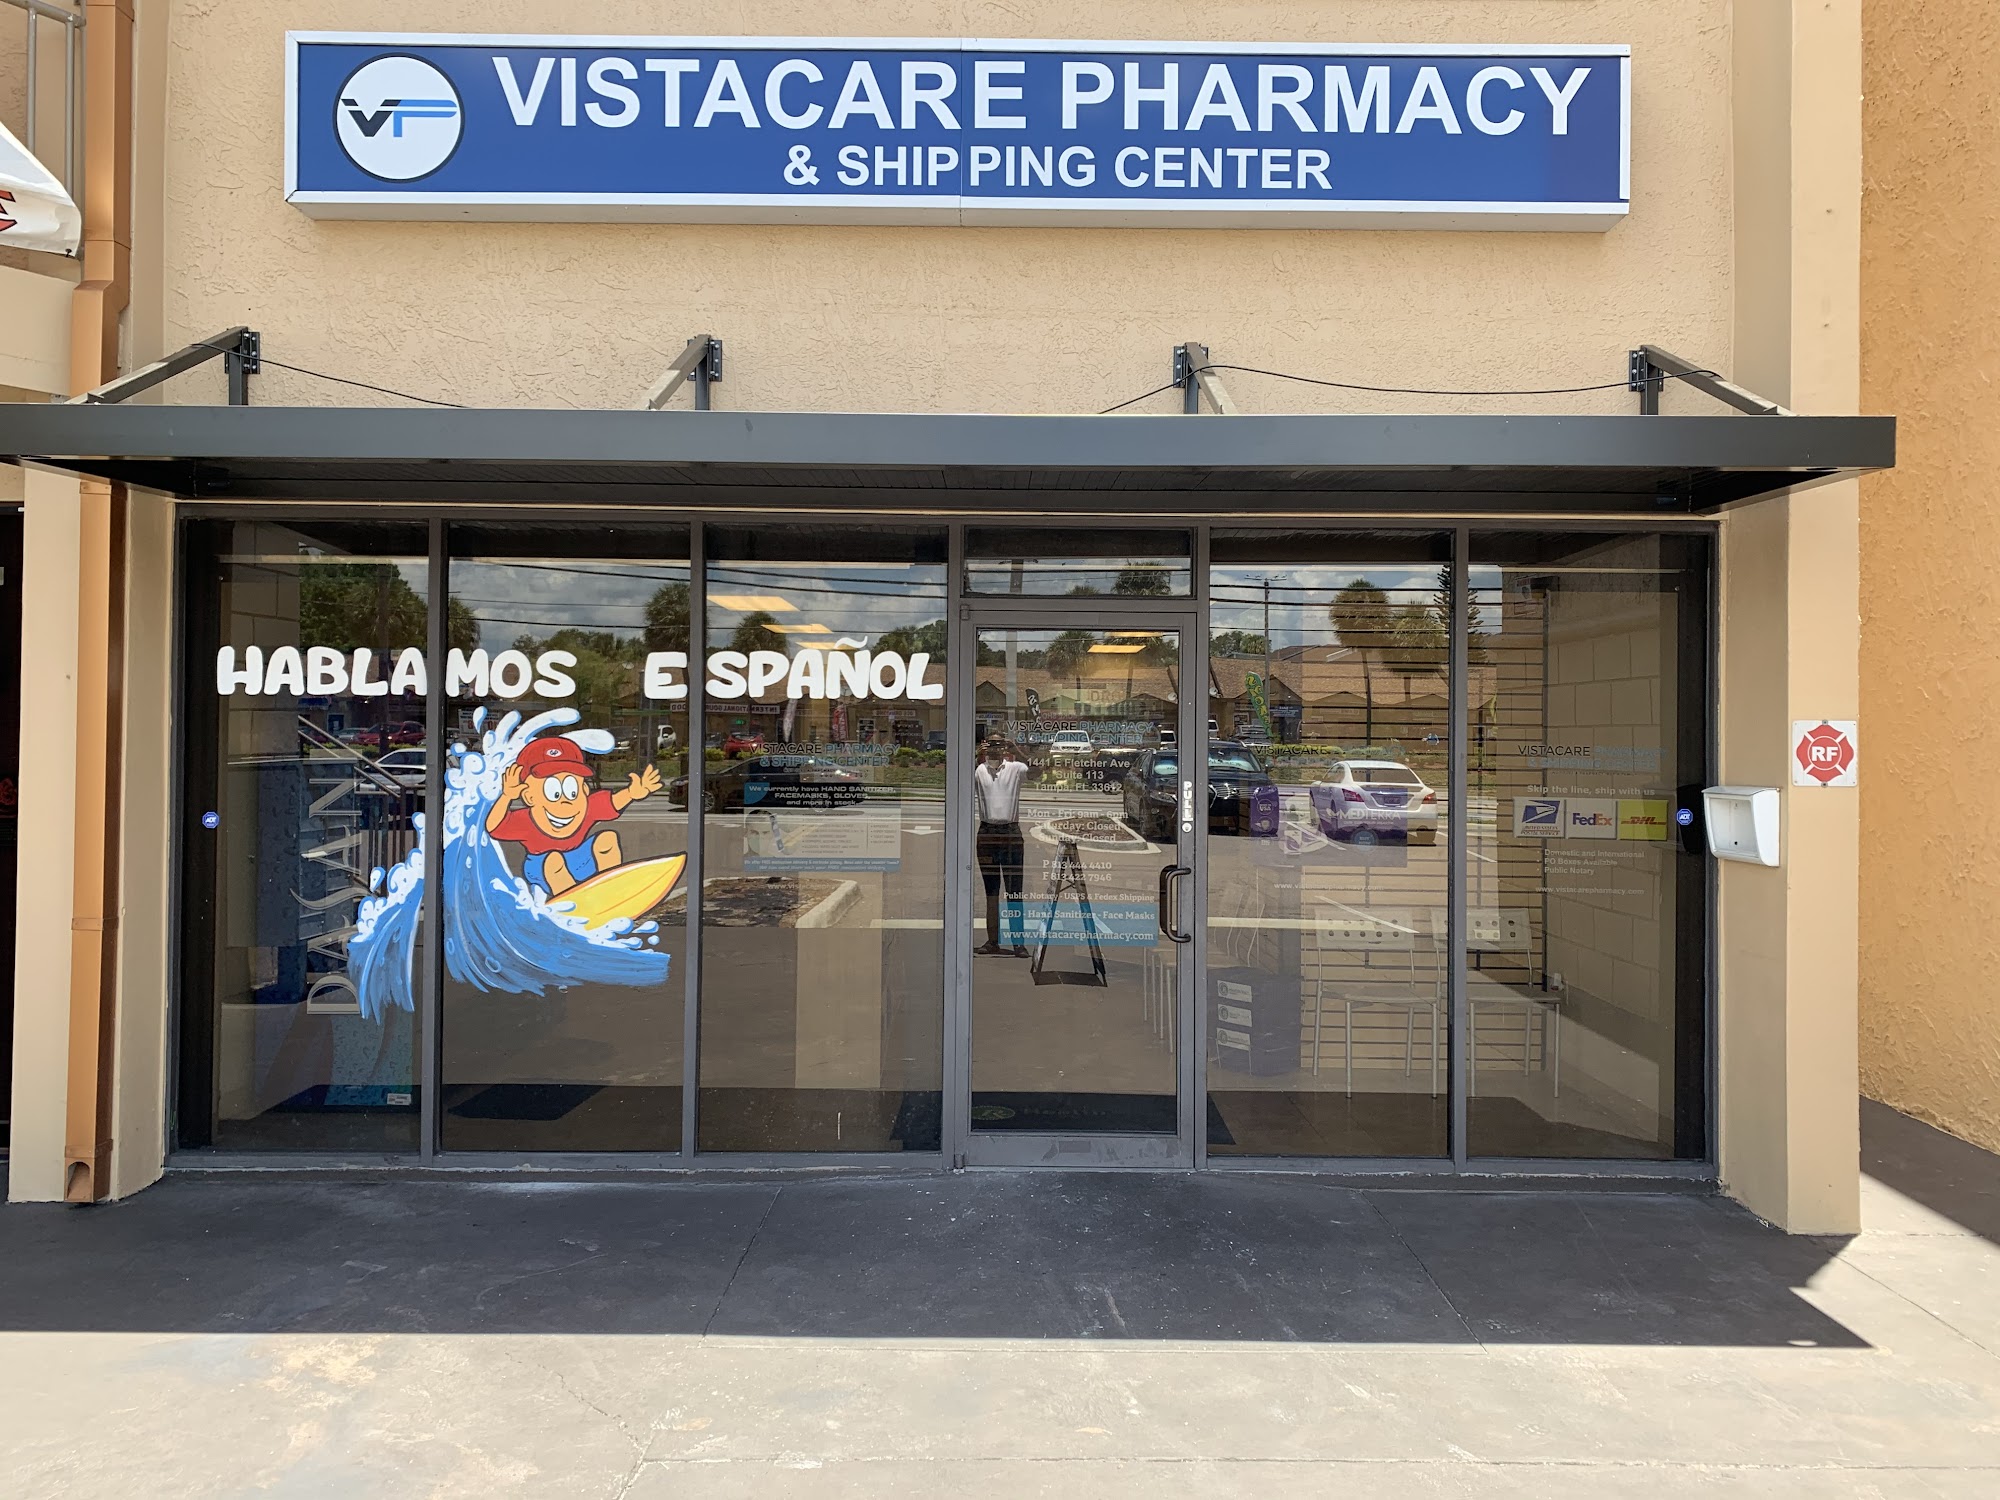 VistaCare Pharmacy & Shipping Center